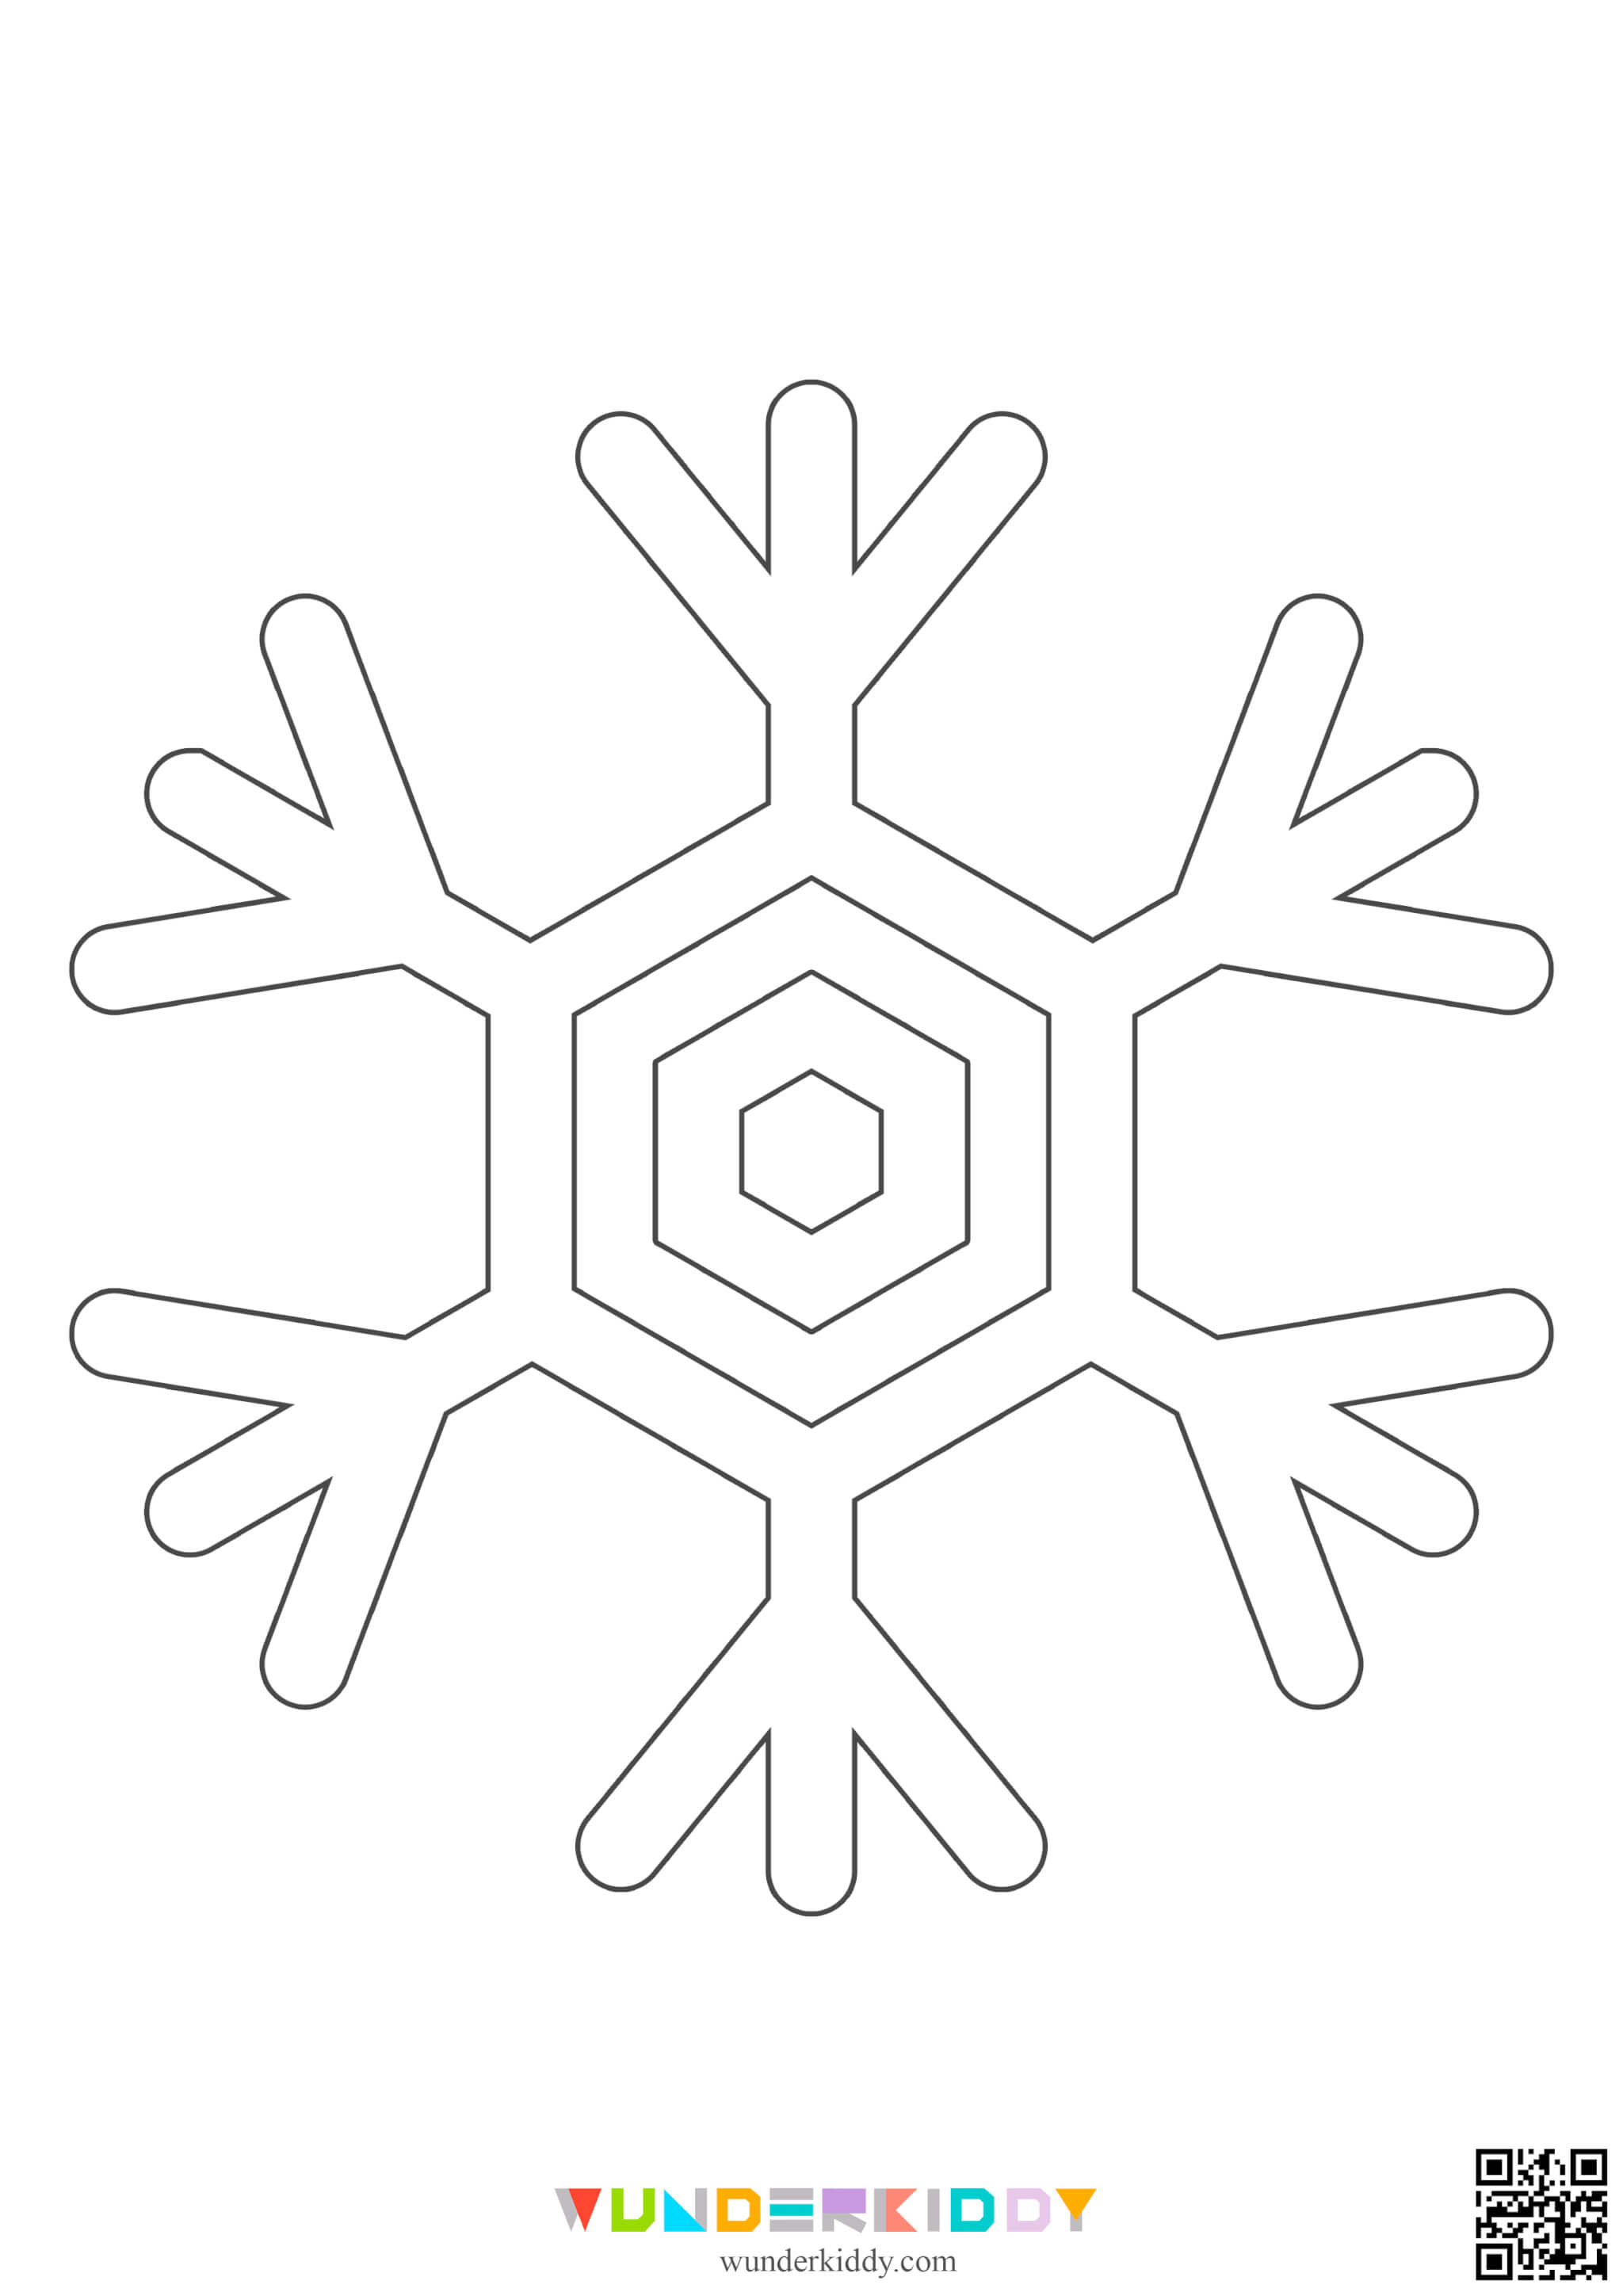 Snowflake Stencil Patterns - Image 3